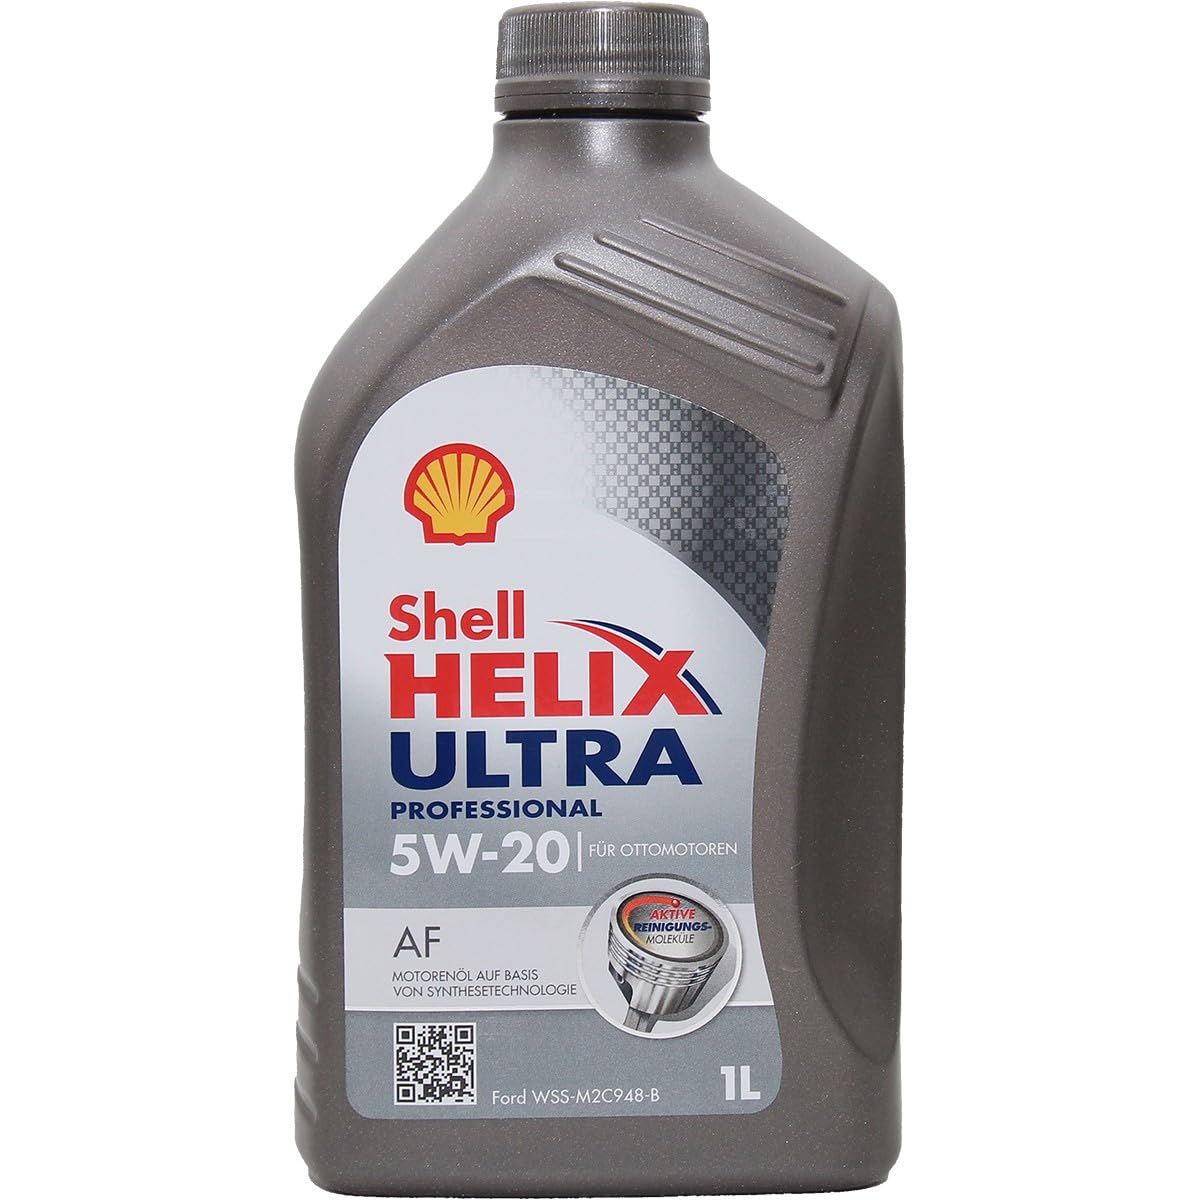 Shell Helix Ultra Professional AF 5W-20, 1 Liter von Shell